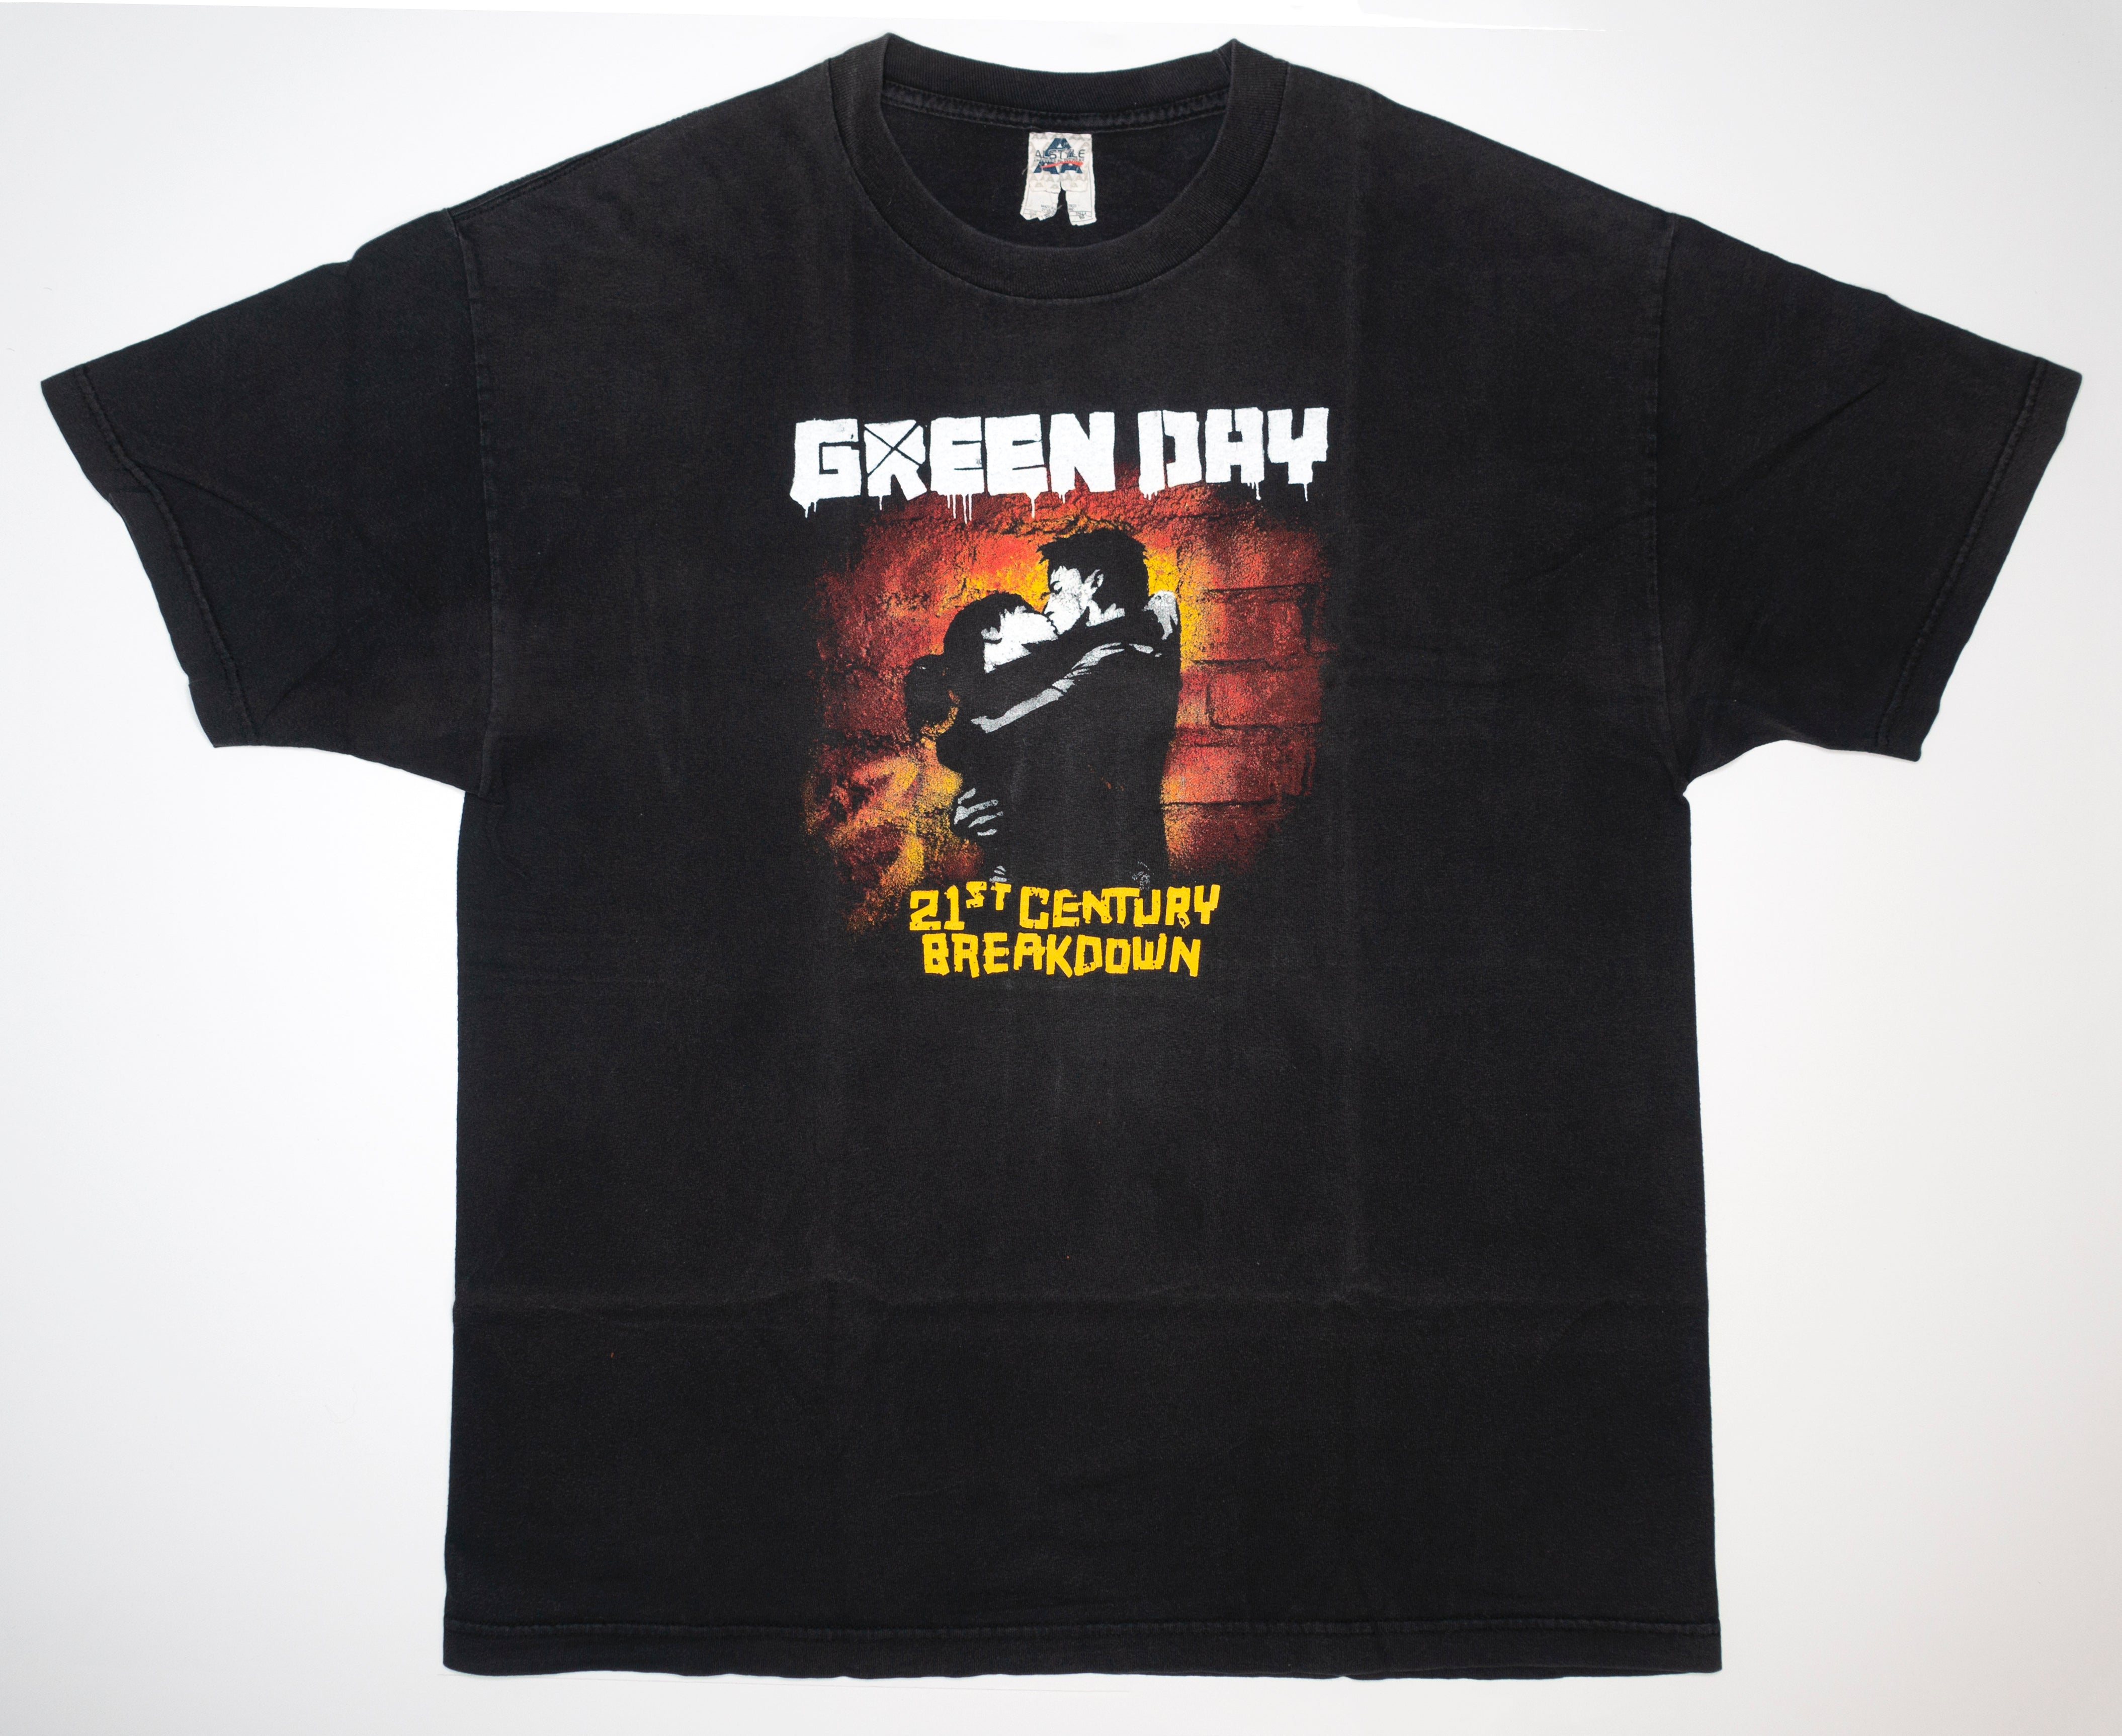 Green Day - 21st Century Breakdown 2009 Tour Shirt Size XL